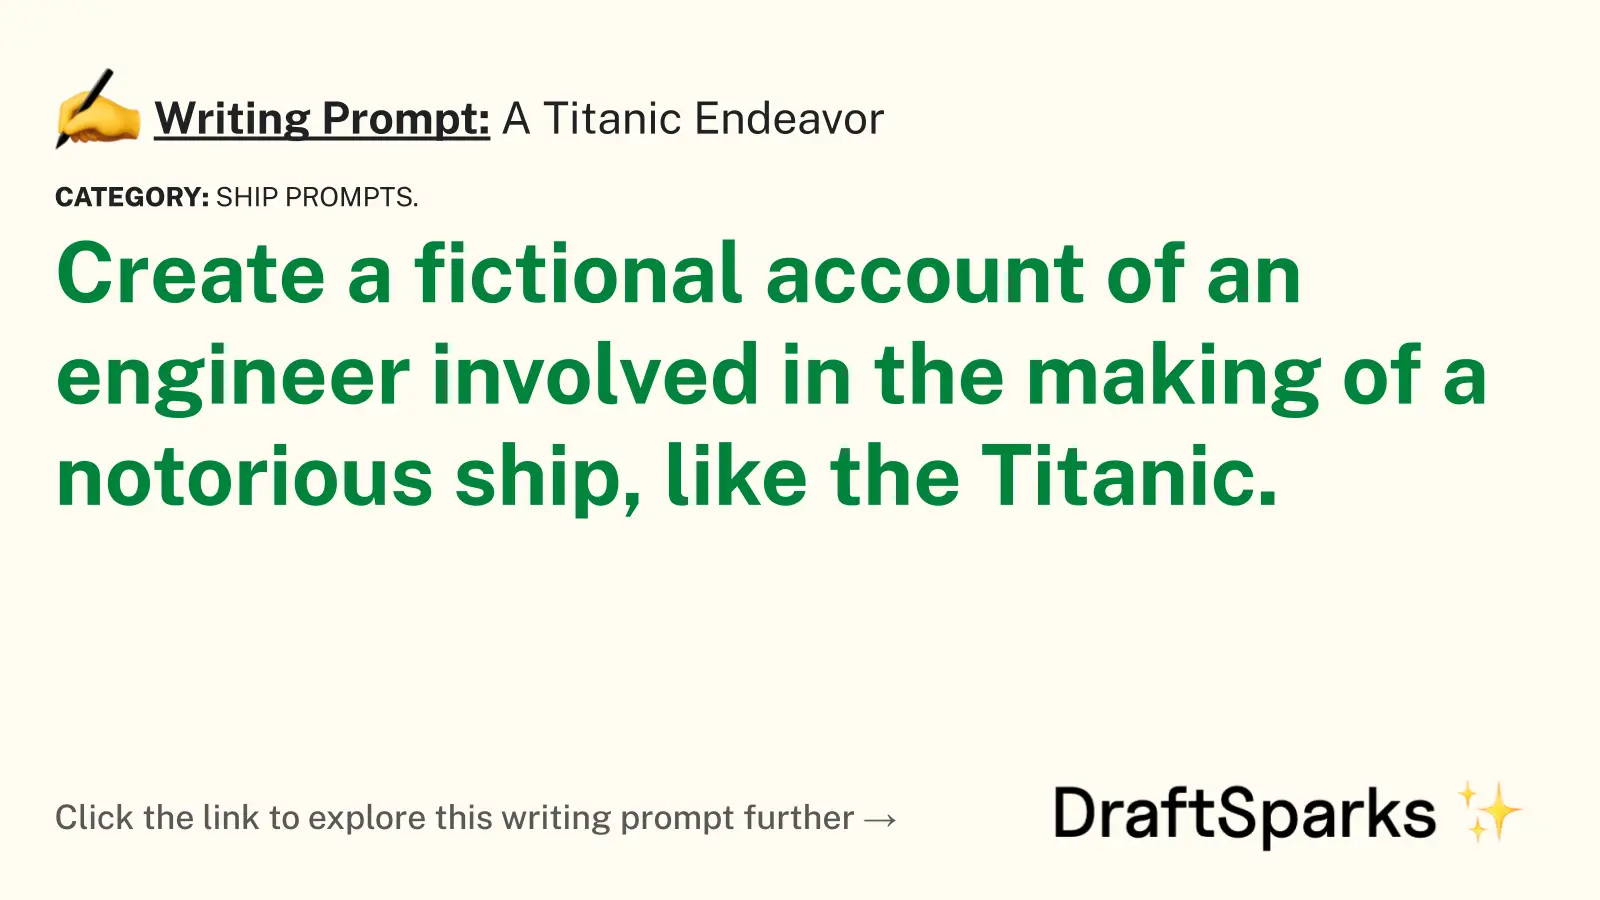 A Titanic Endeavor